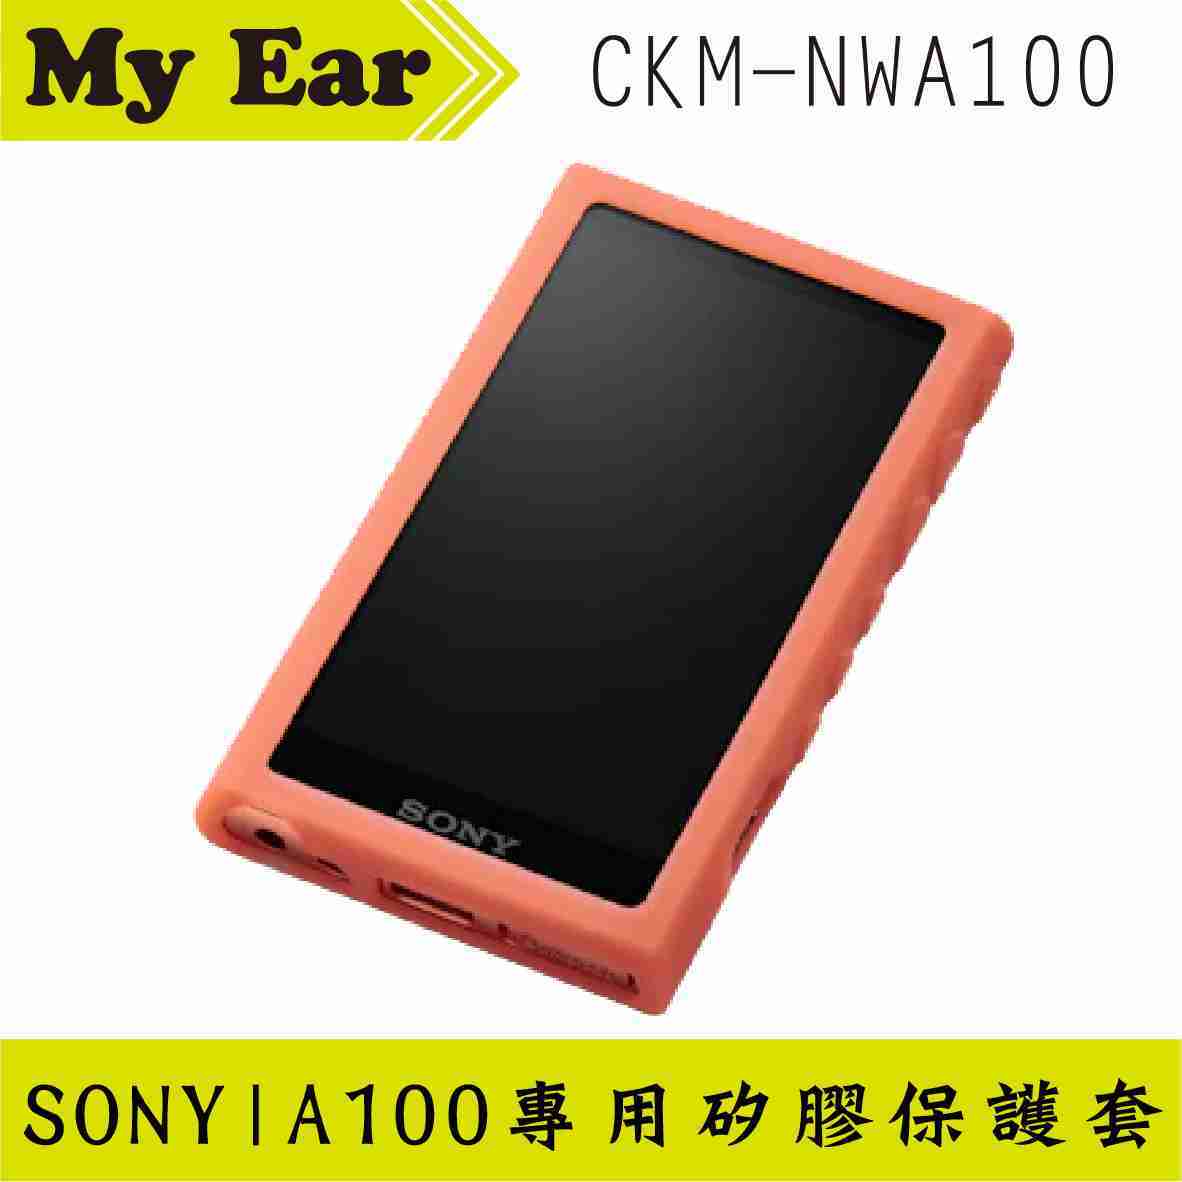 SONY 索尼 CKM-NWA100 橘色 Walkman® 專用矽膠保護殼 | My Ear 耳機專門店